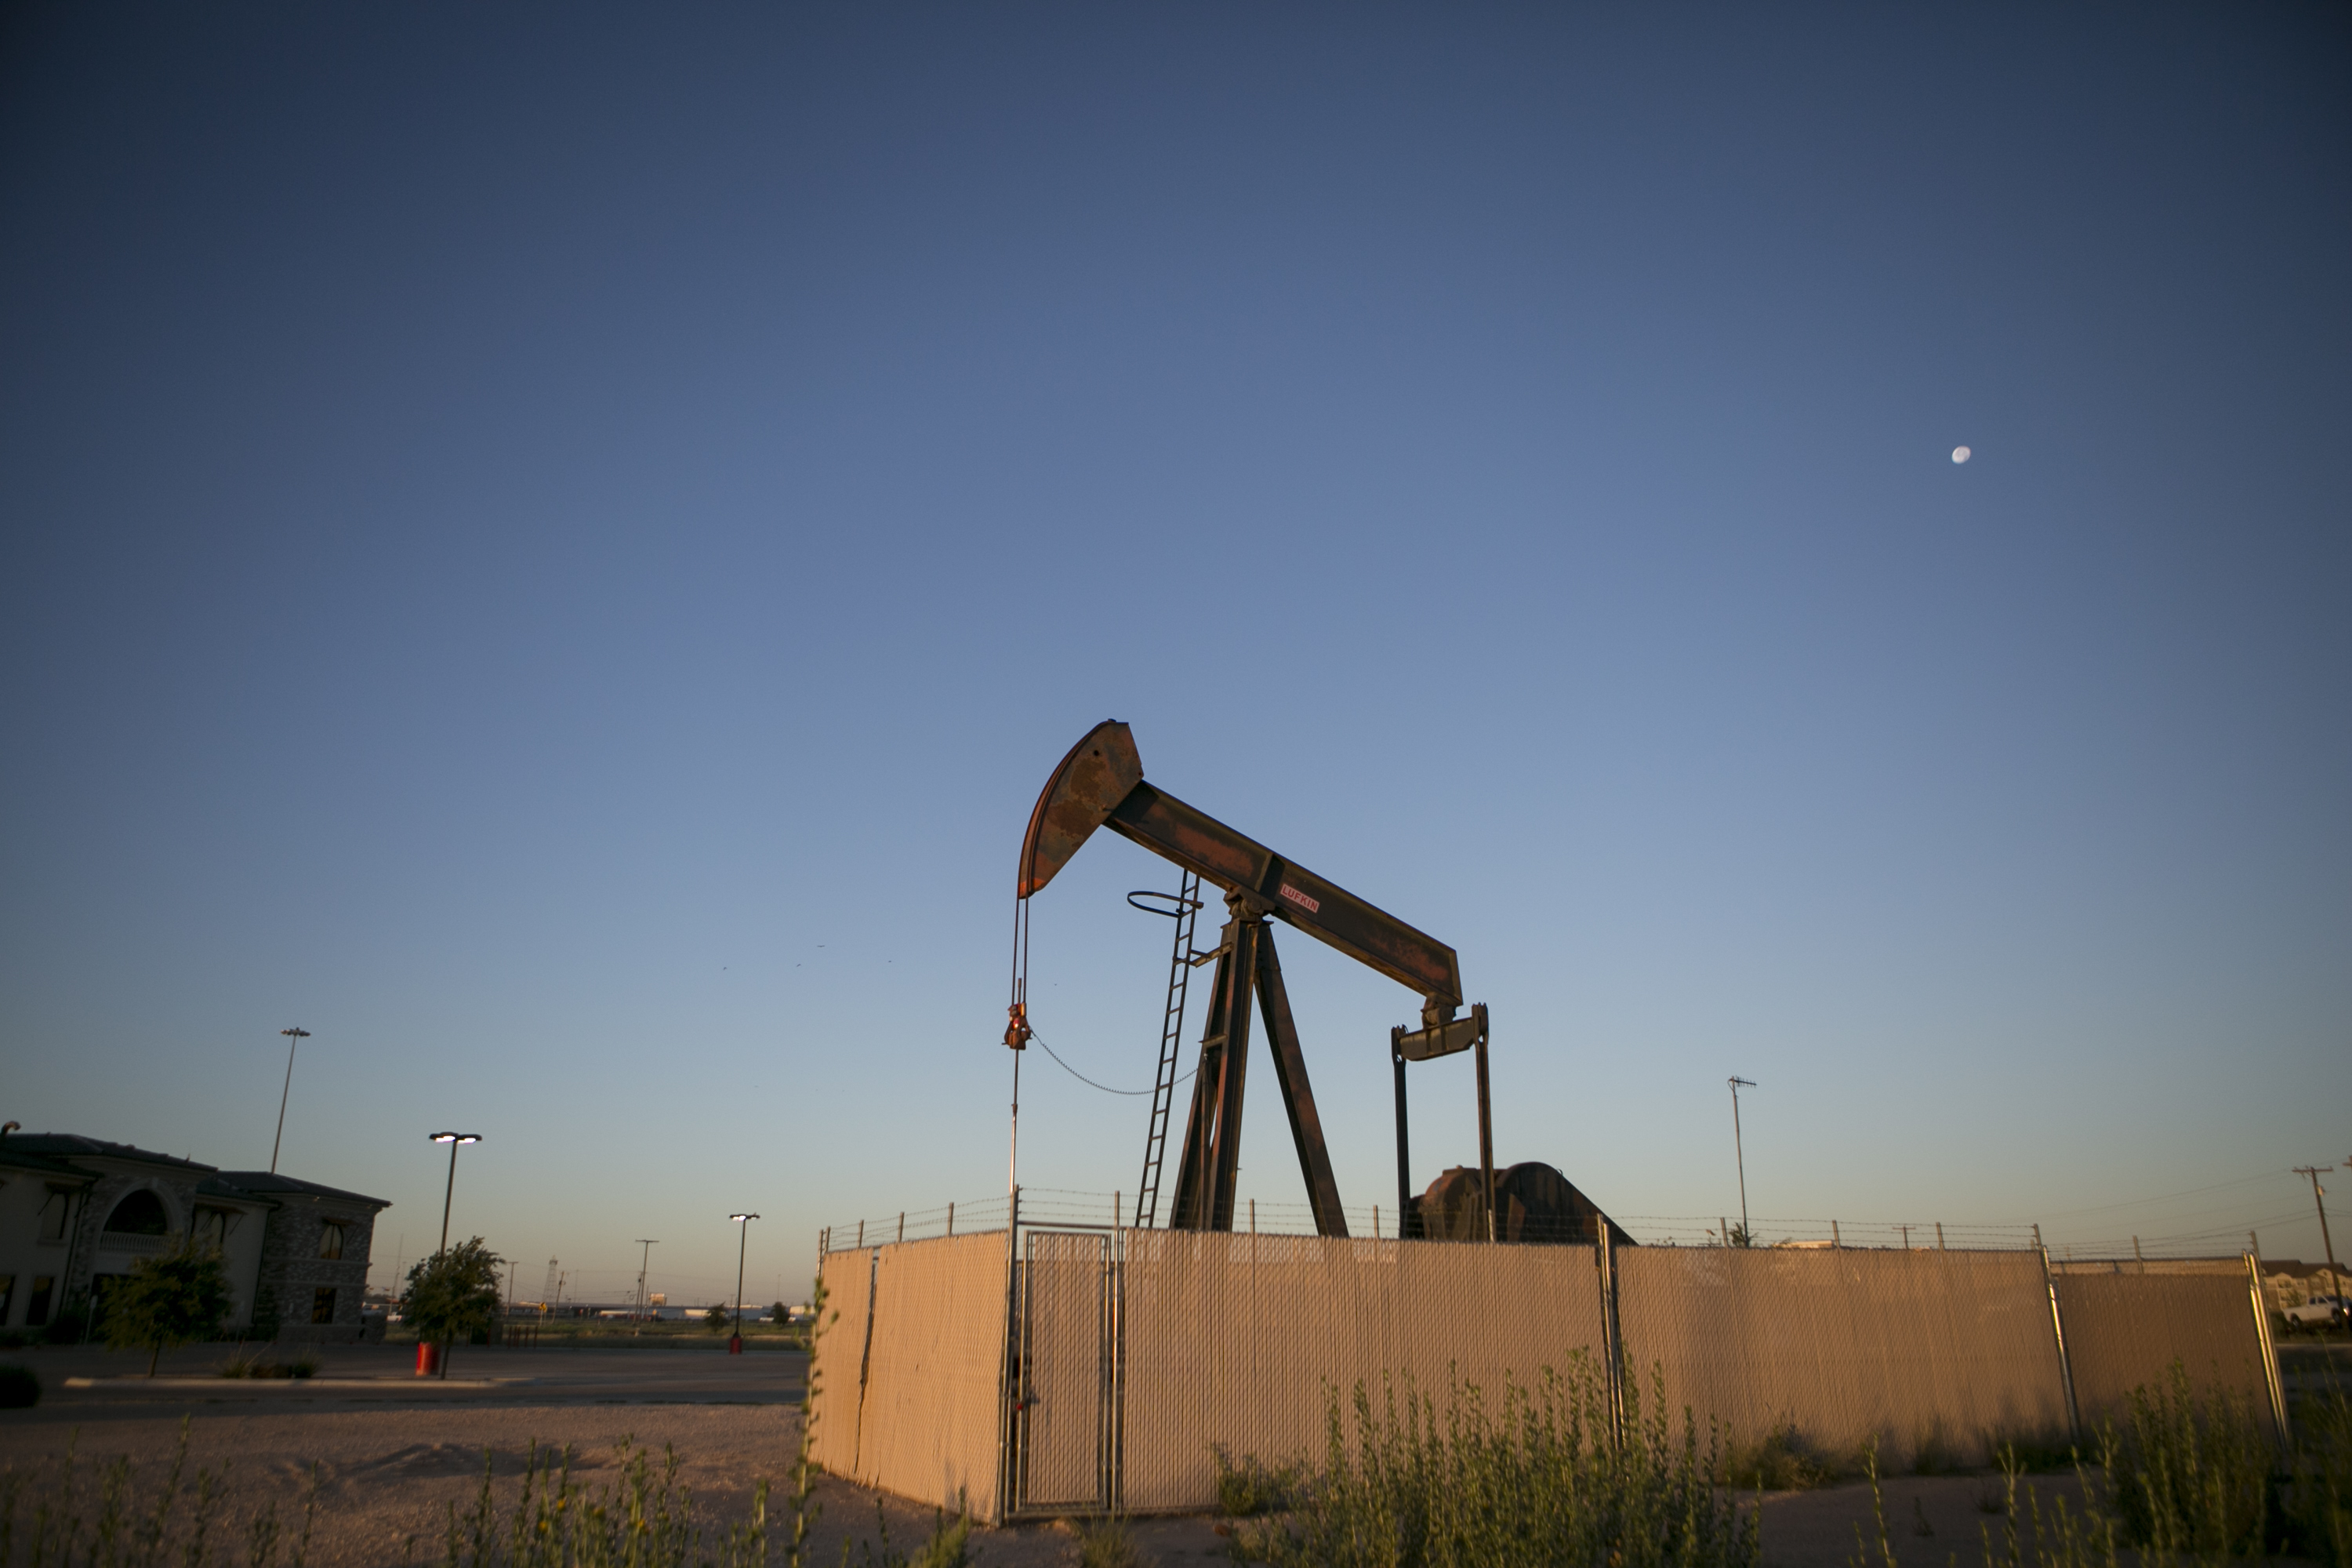 Pump jacks dot the landscape outside Midland, a West Texas oil town. 